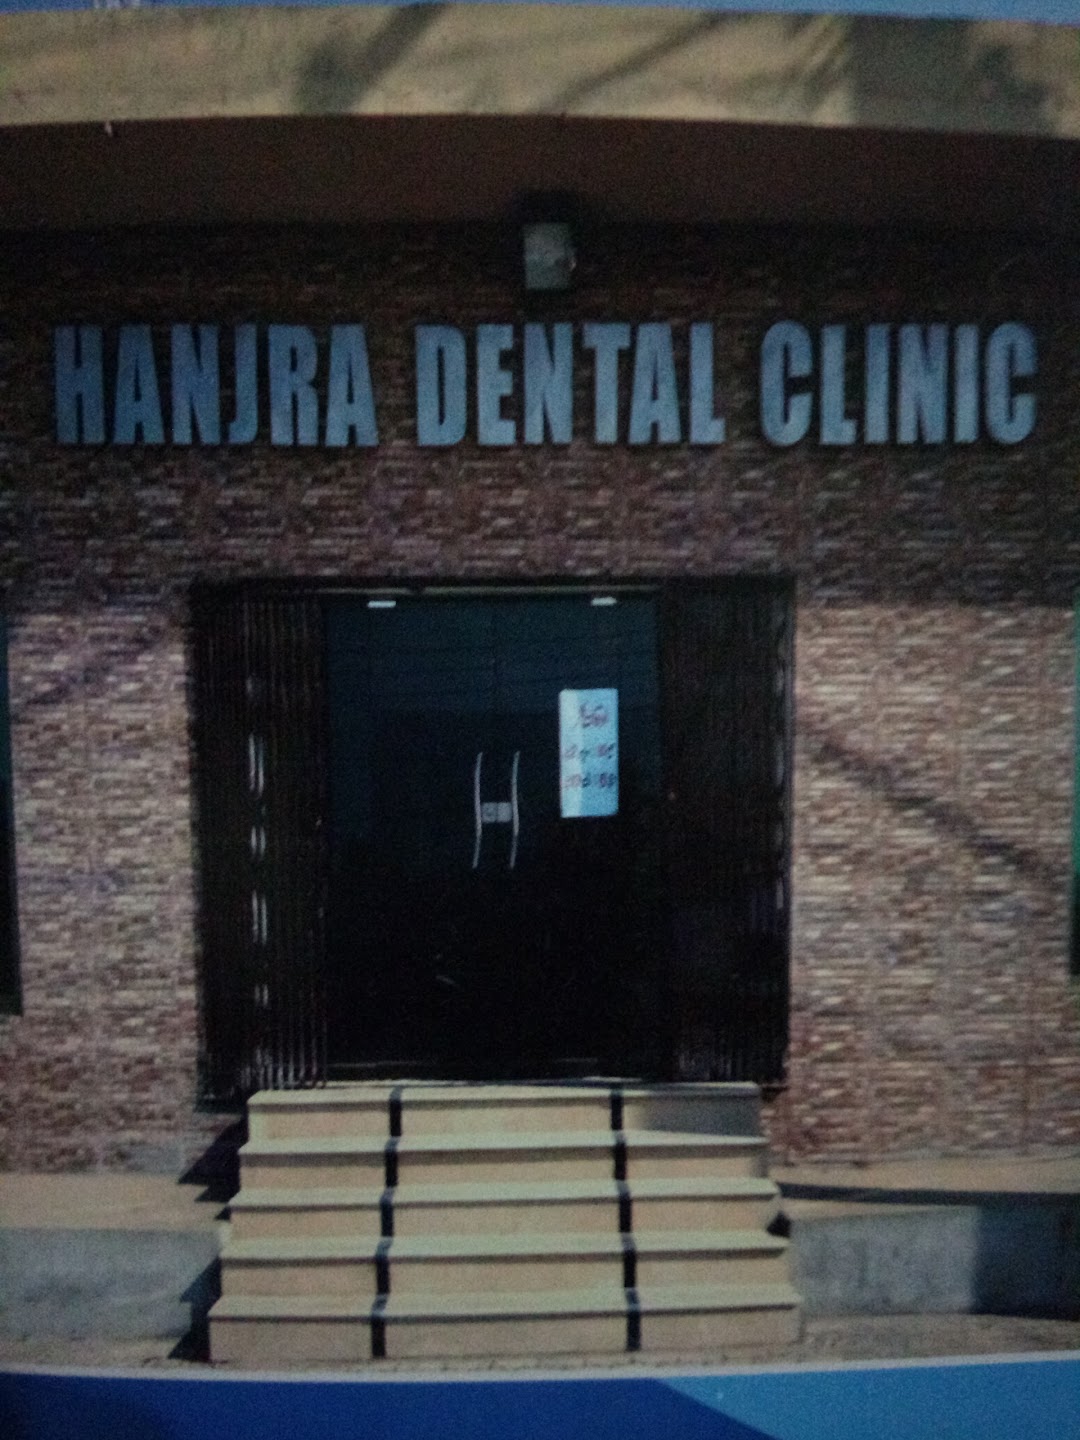 Hanjra Dental Clinic